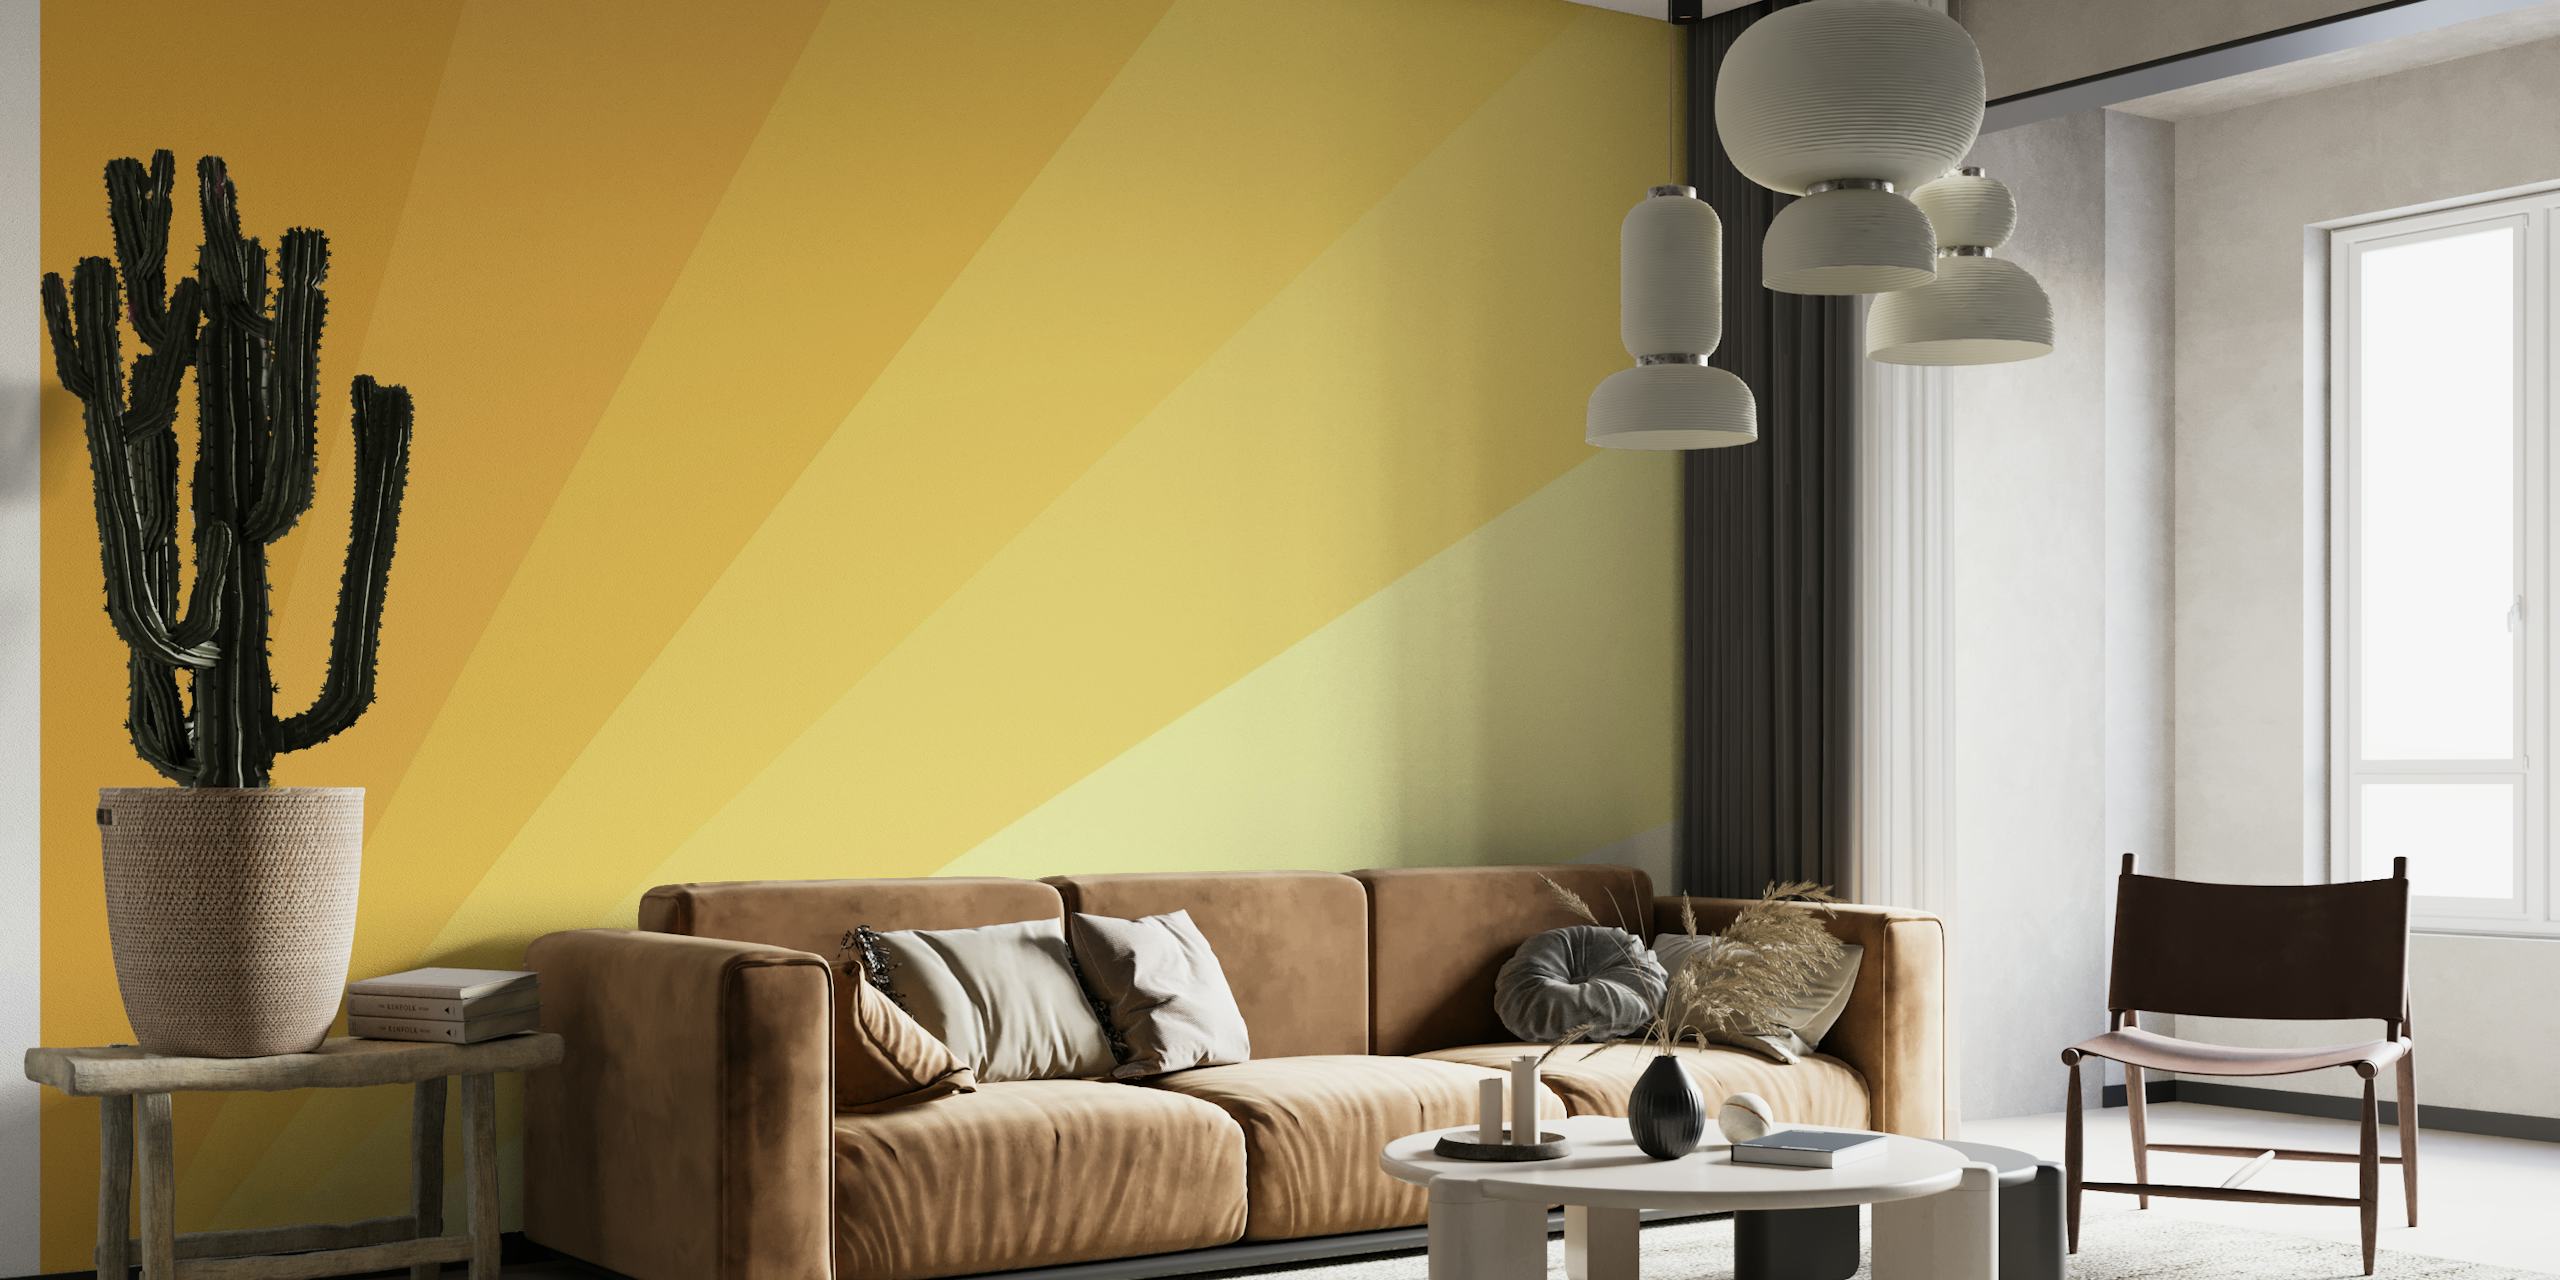 Zidna slika s gradijentom apstraktne prizme od žute do krem boje